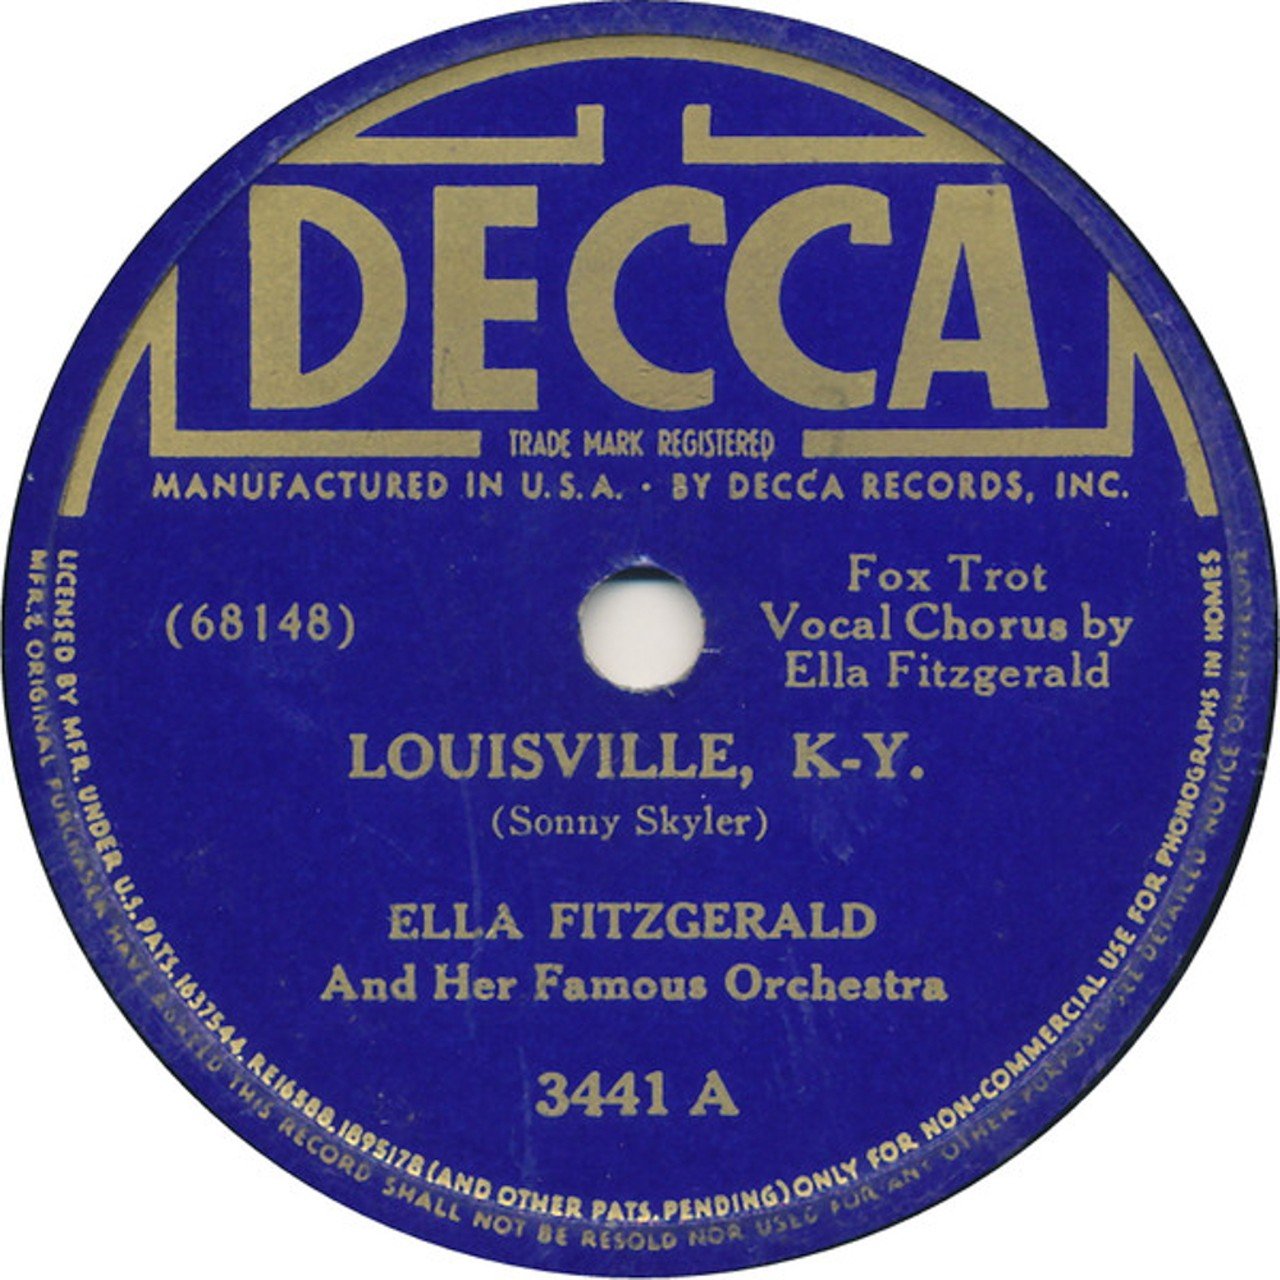  Ella Fitzgerald &#151; &#147;Louisville, K-Y&#148; 
&#147;Take me back to Louisville,
Take me 'neath that southern sky,
Wanna see Louisville,
Louisville K-Y&#148;